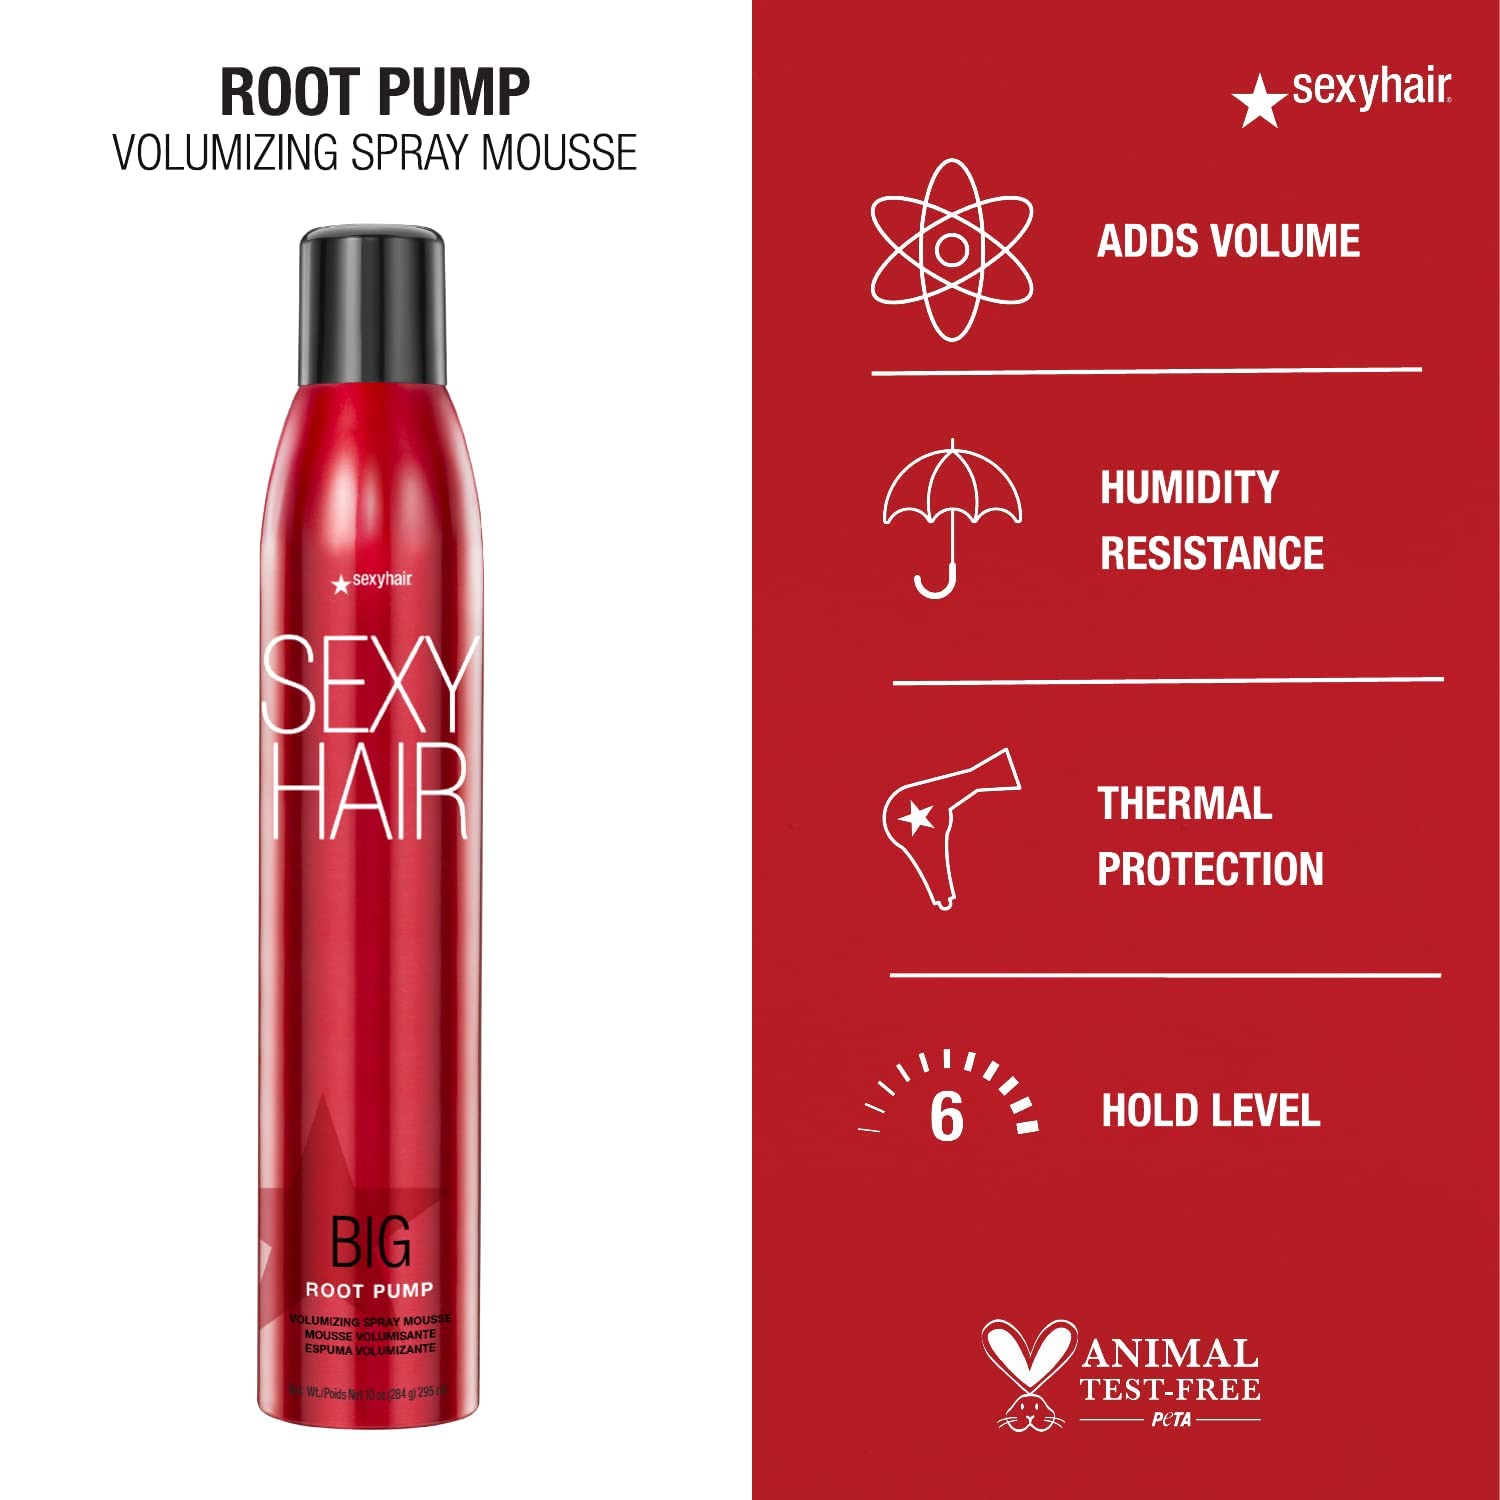 Big Sexy Hair Root Pump Volumizing Spray Mousse Benefits